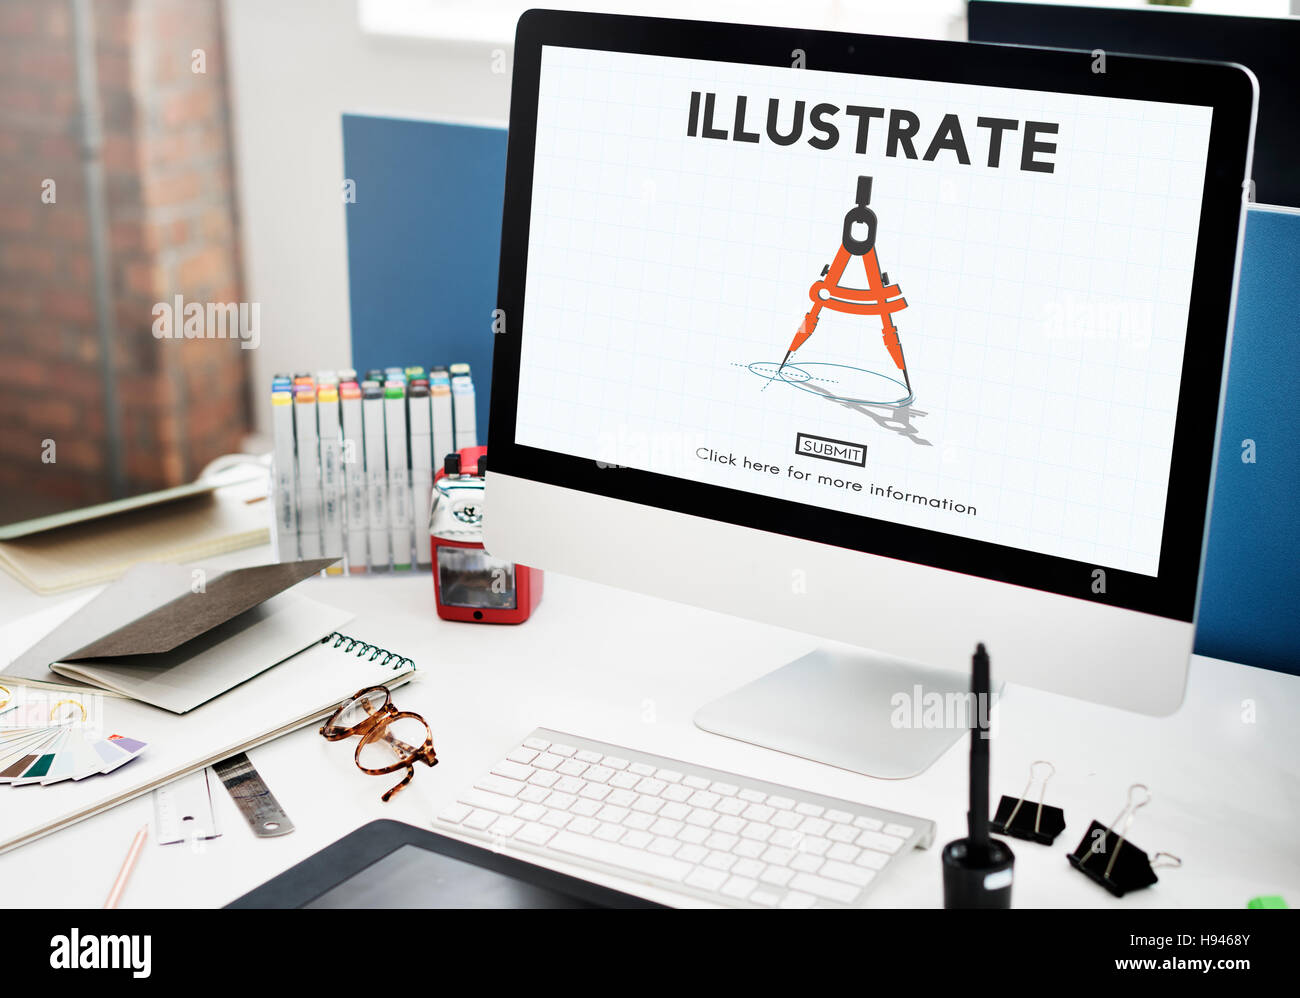 Illustrate Create Imagination Ideas Artistic Concept Stock Photo